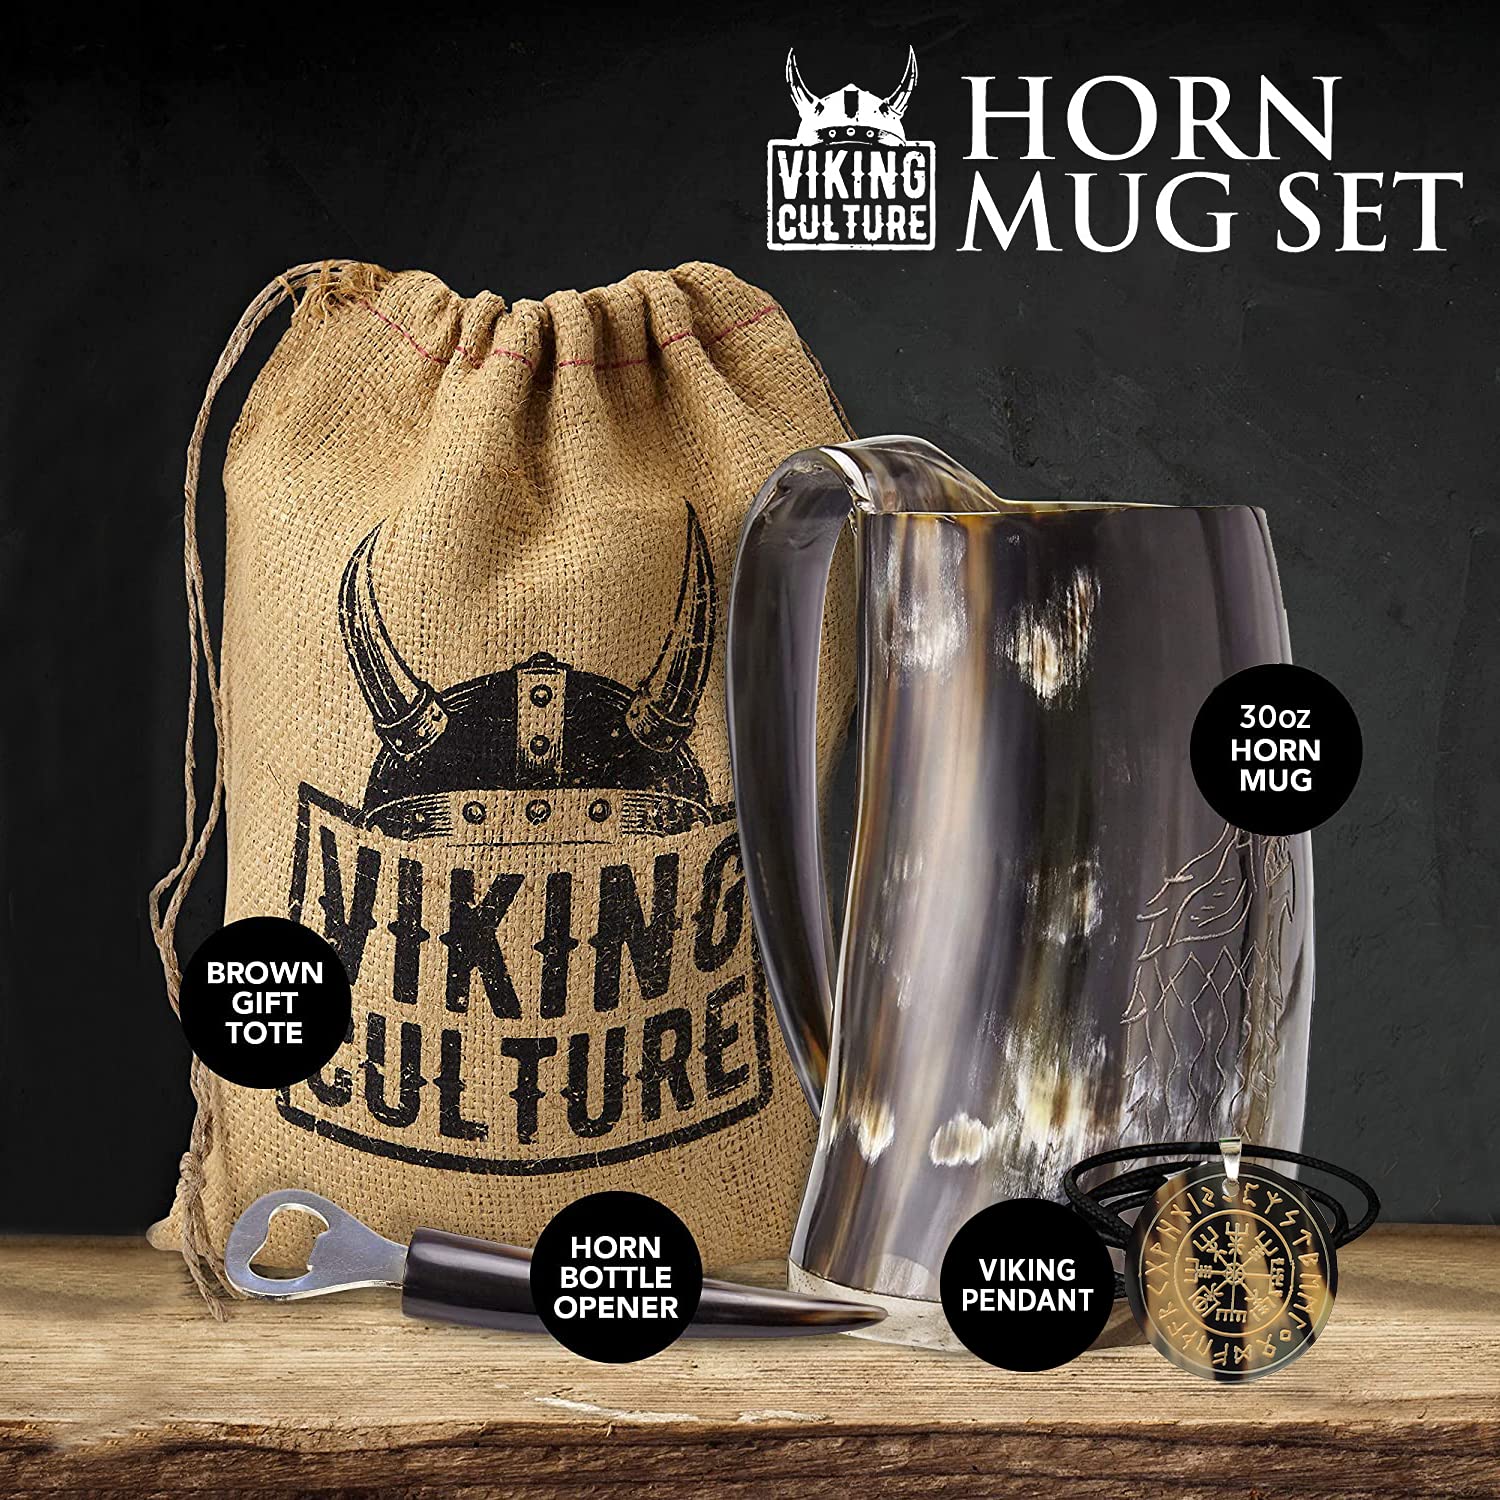 King Hoff : Stainless steel mug with handle : KH-1483